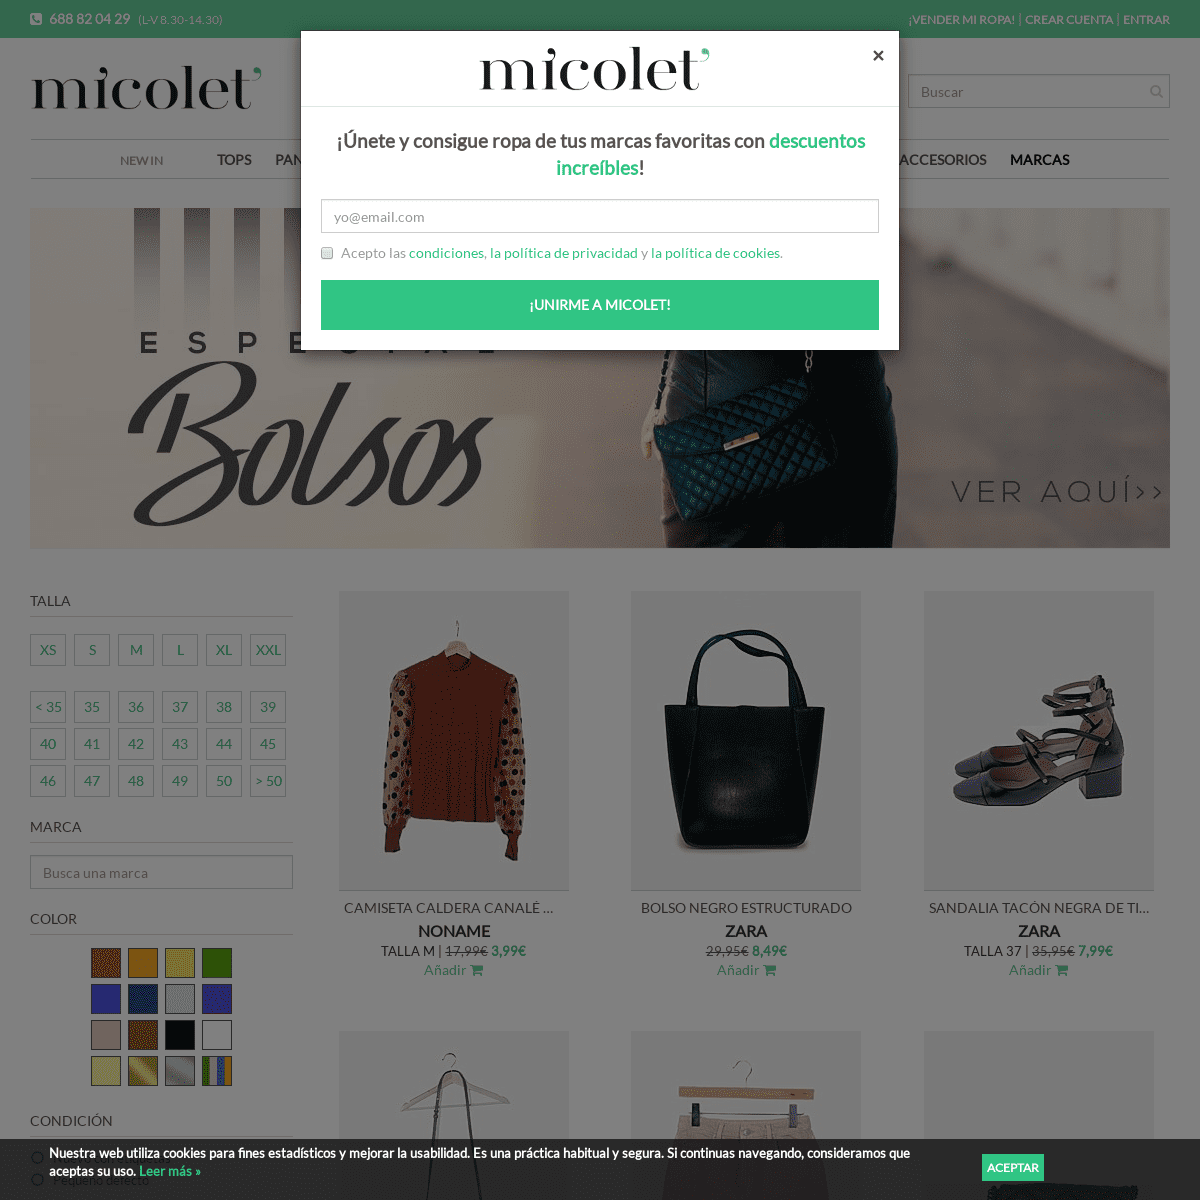 A complete backup of micolet.com